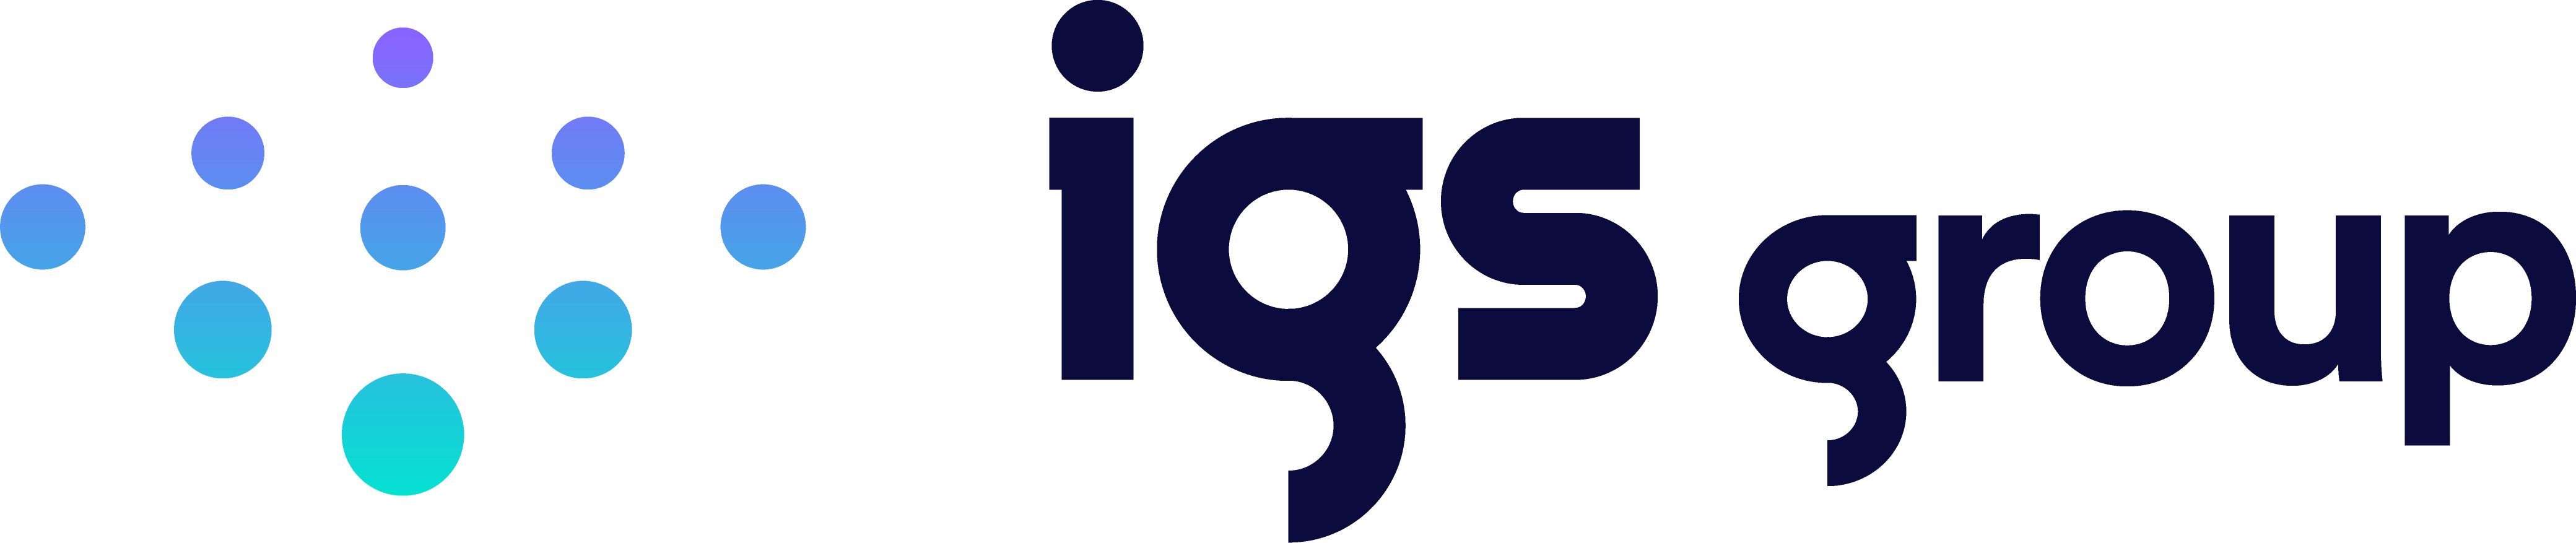 IGS-logo-2